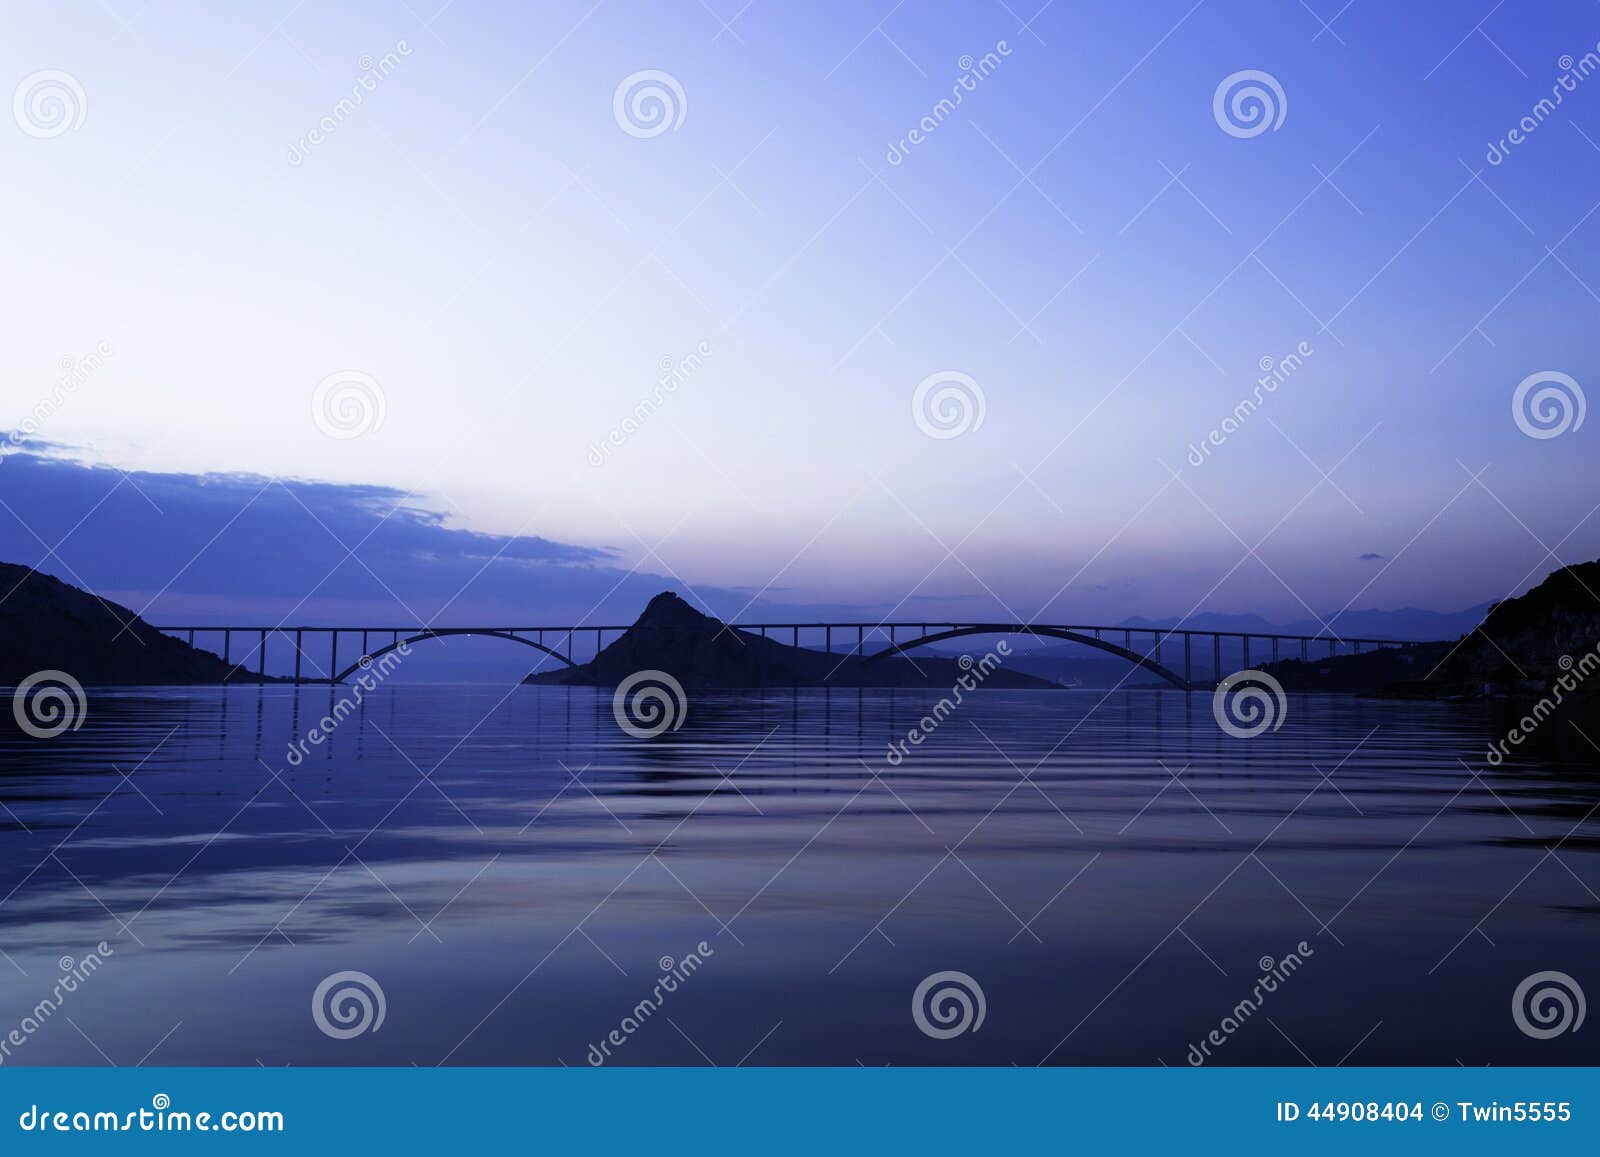 bridge krk, croatia